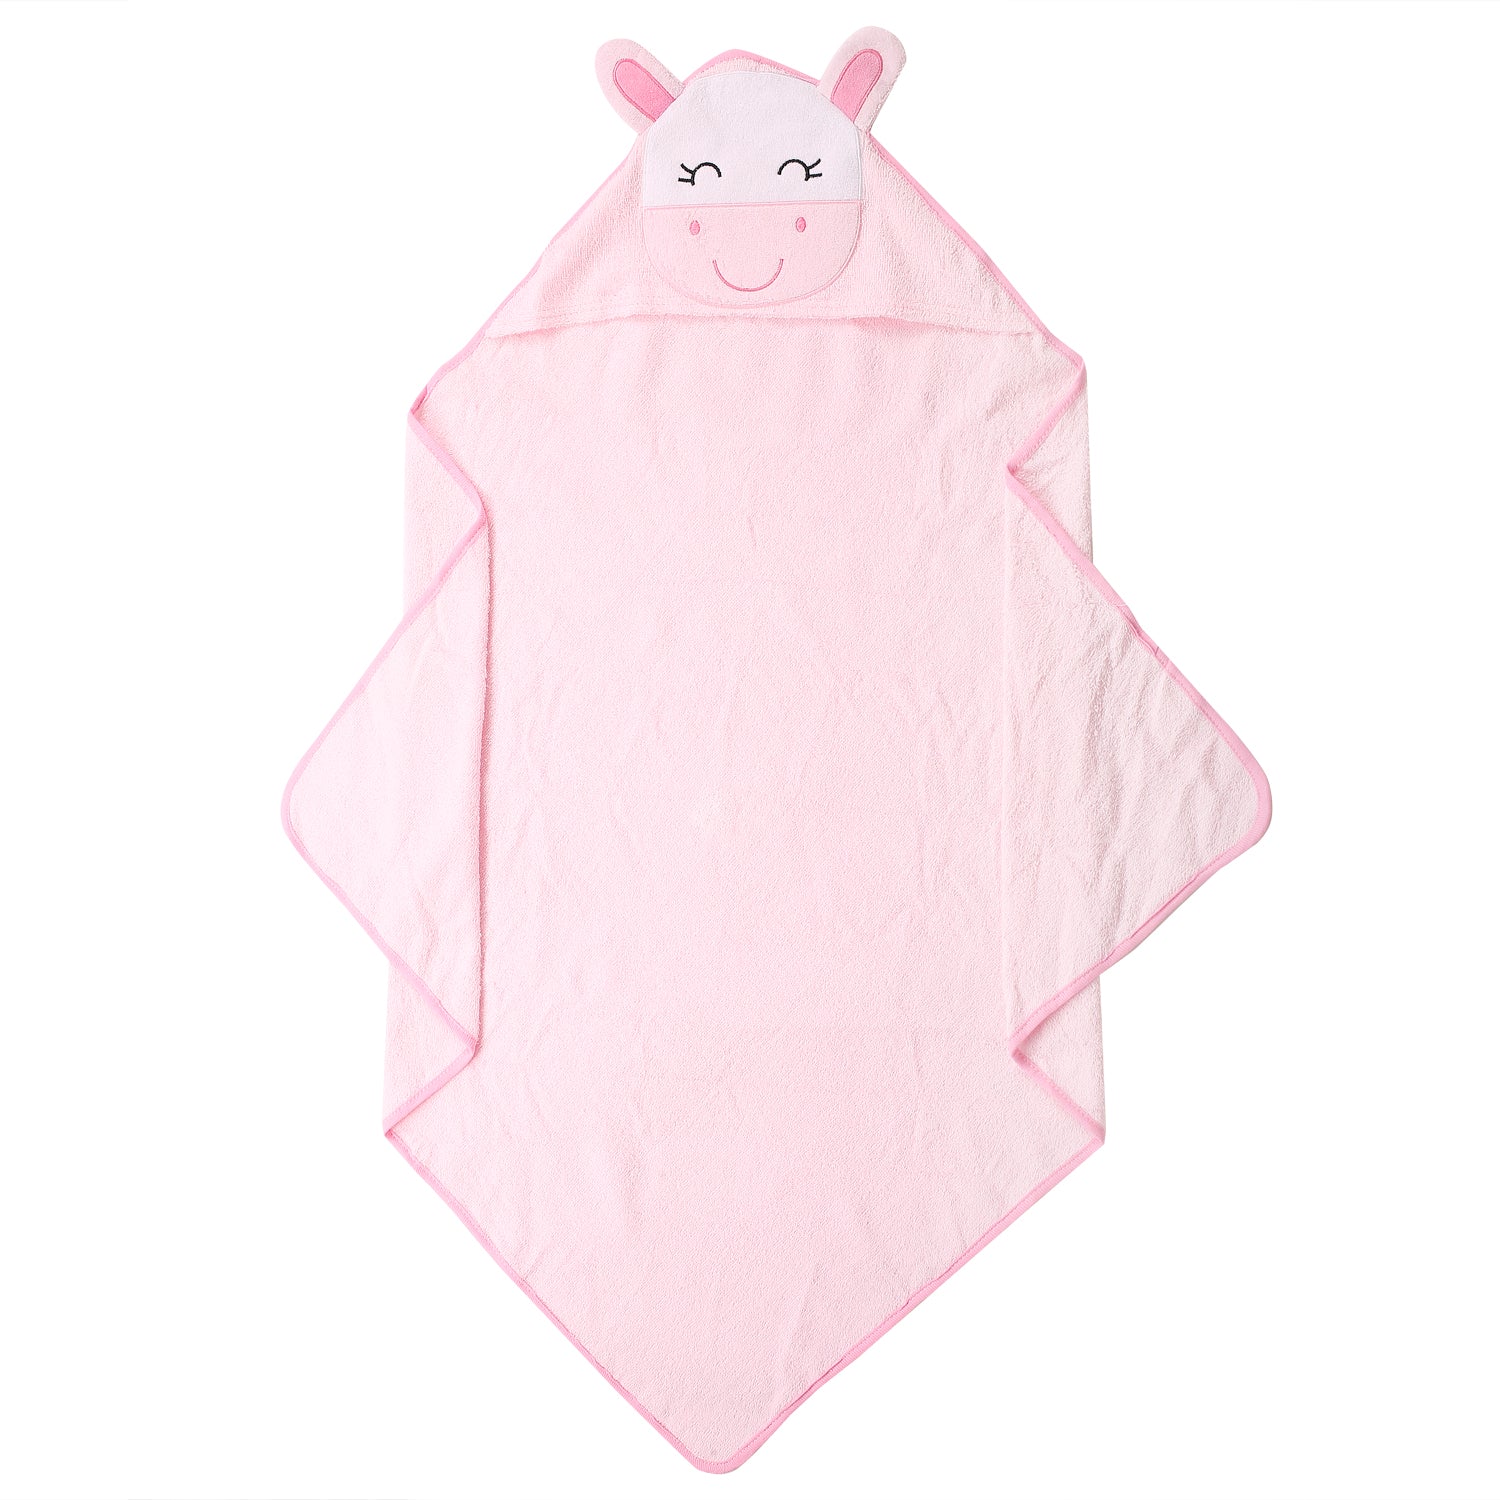 Sleepy Bunny Pink Hooded Towel